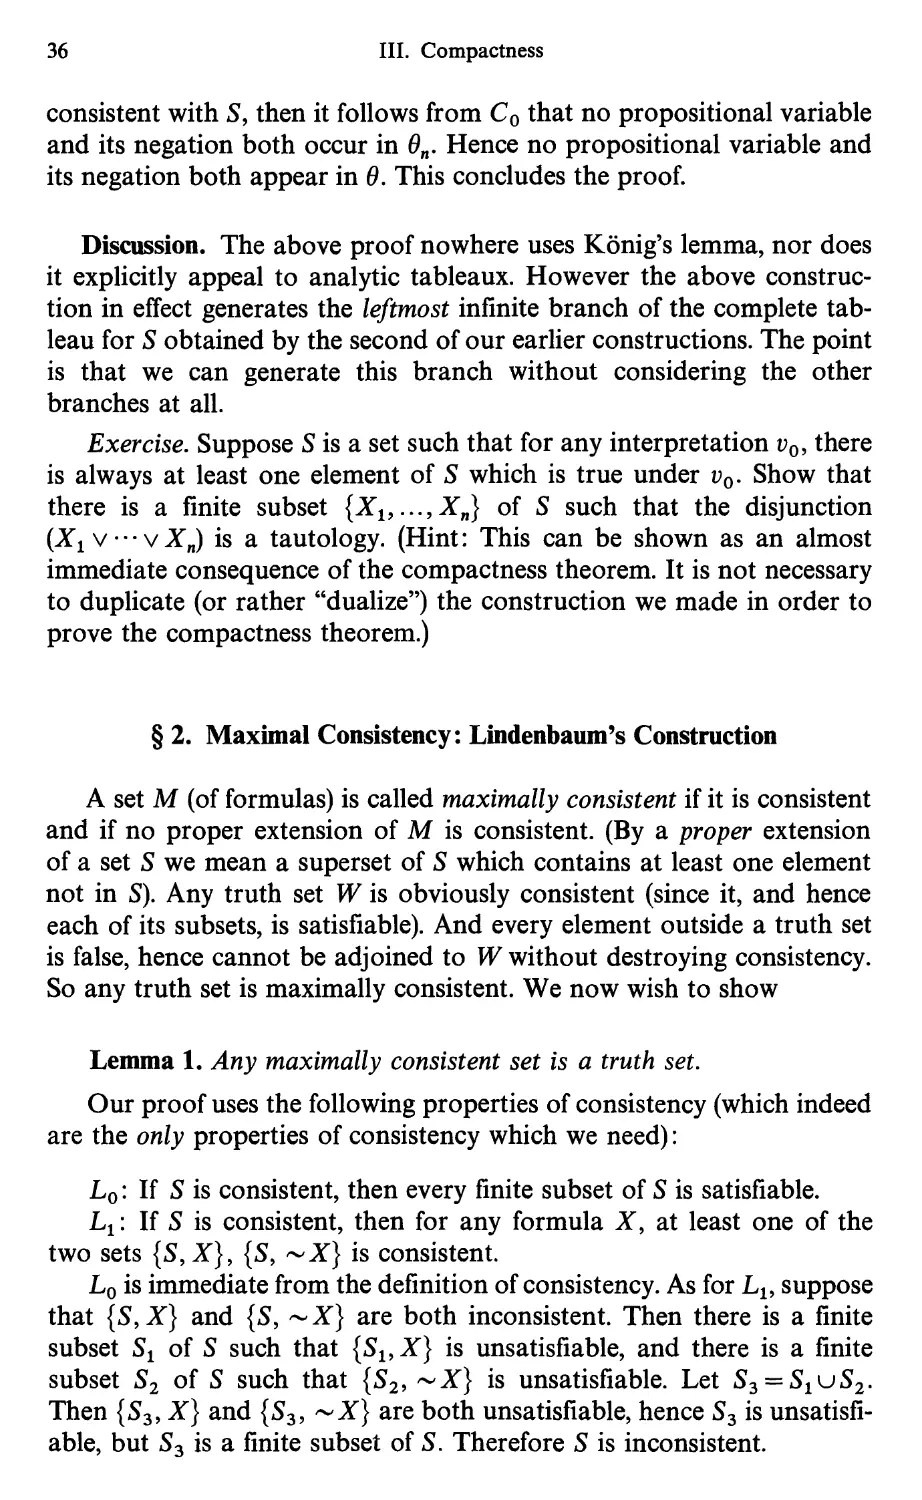 3.2 Maximal Consistency: Lindenbaum's Construction